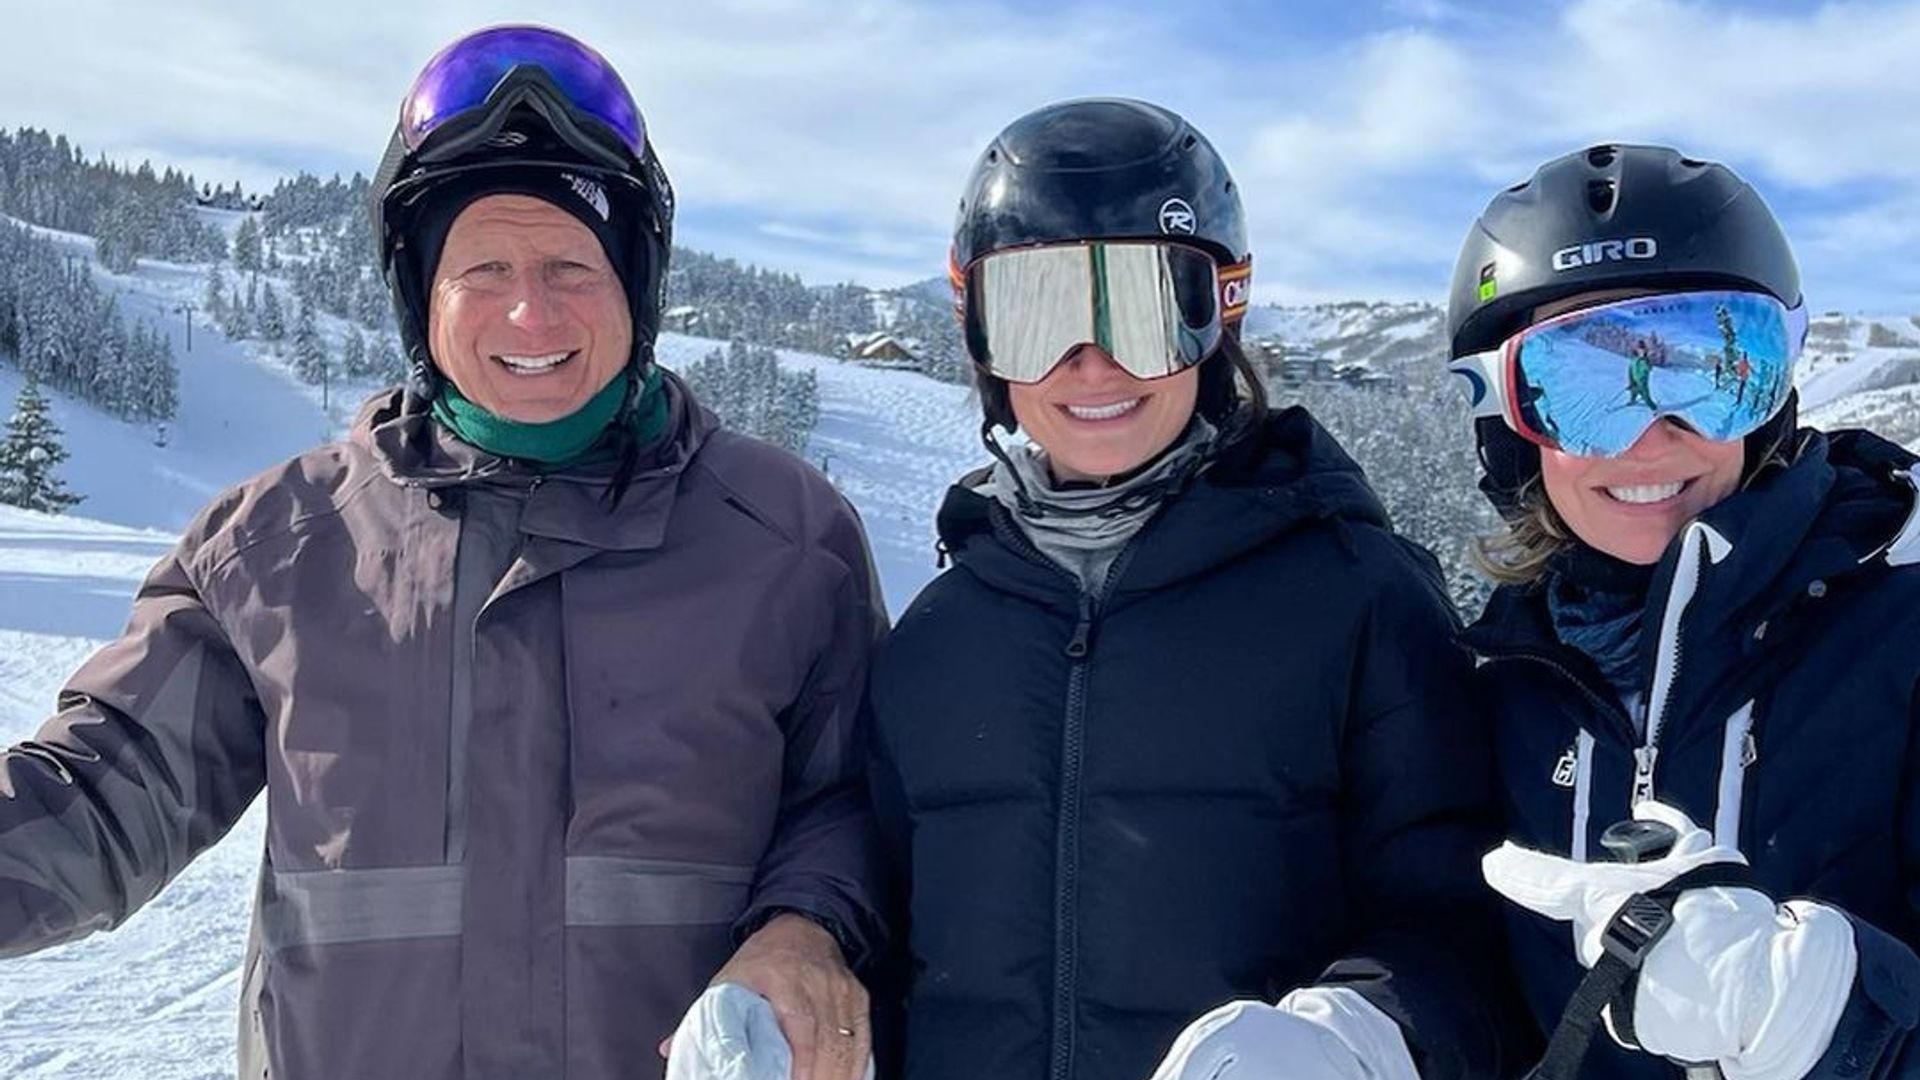 Jennifer, Tom and Chloe smiling in ski gear on a mountain